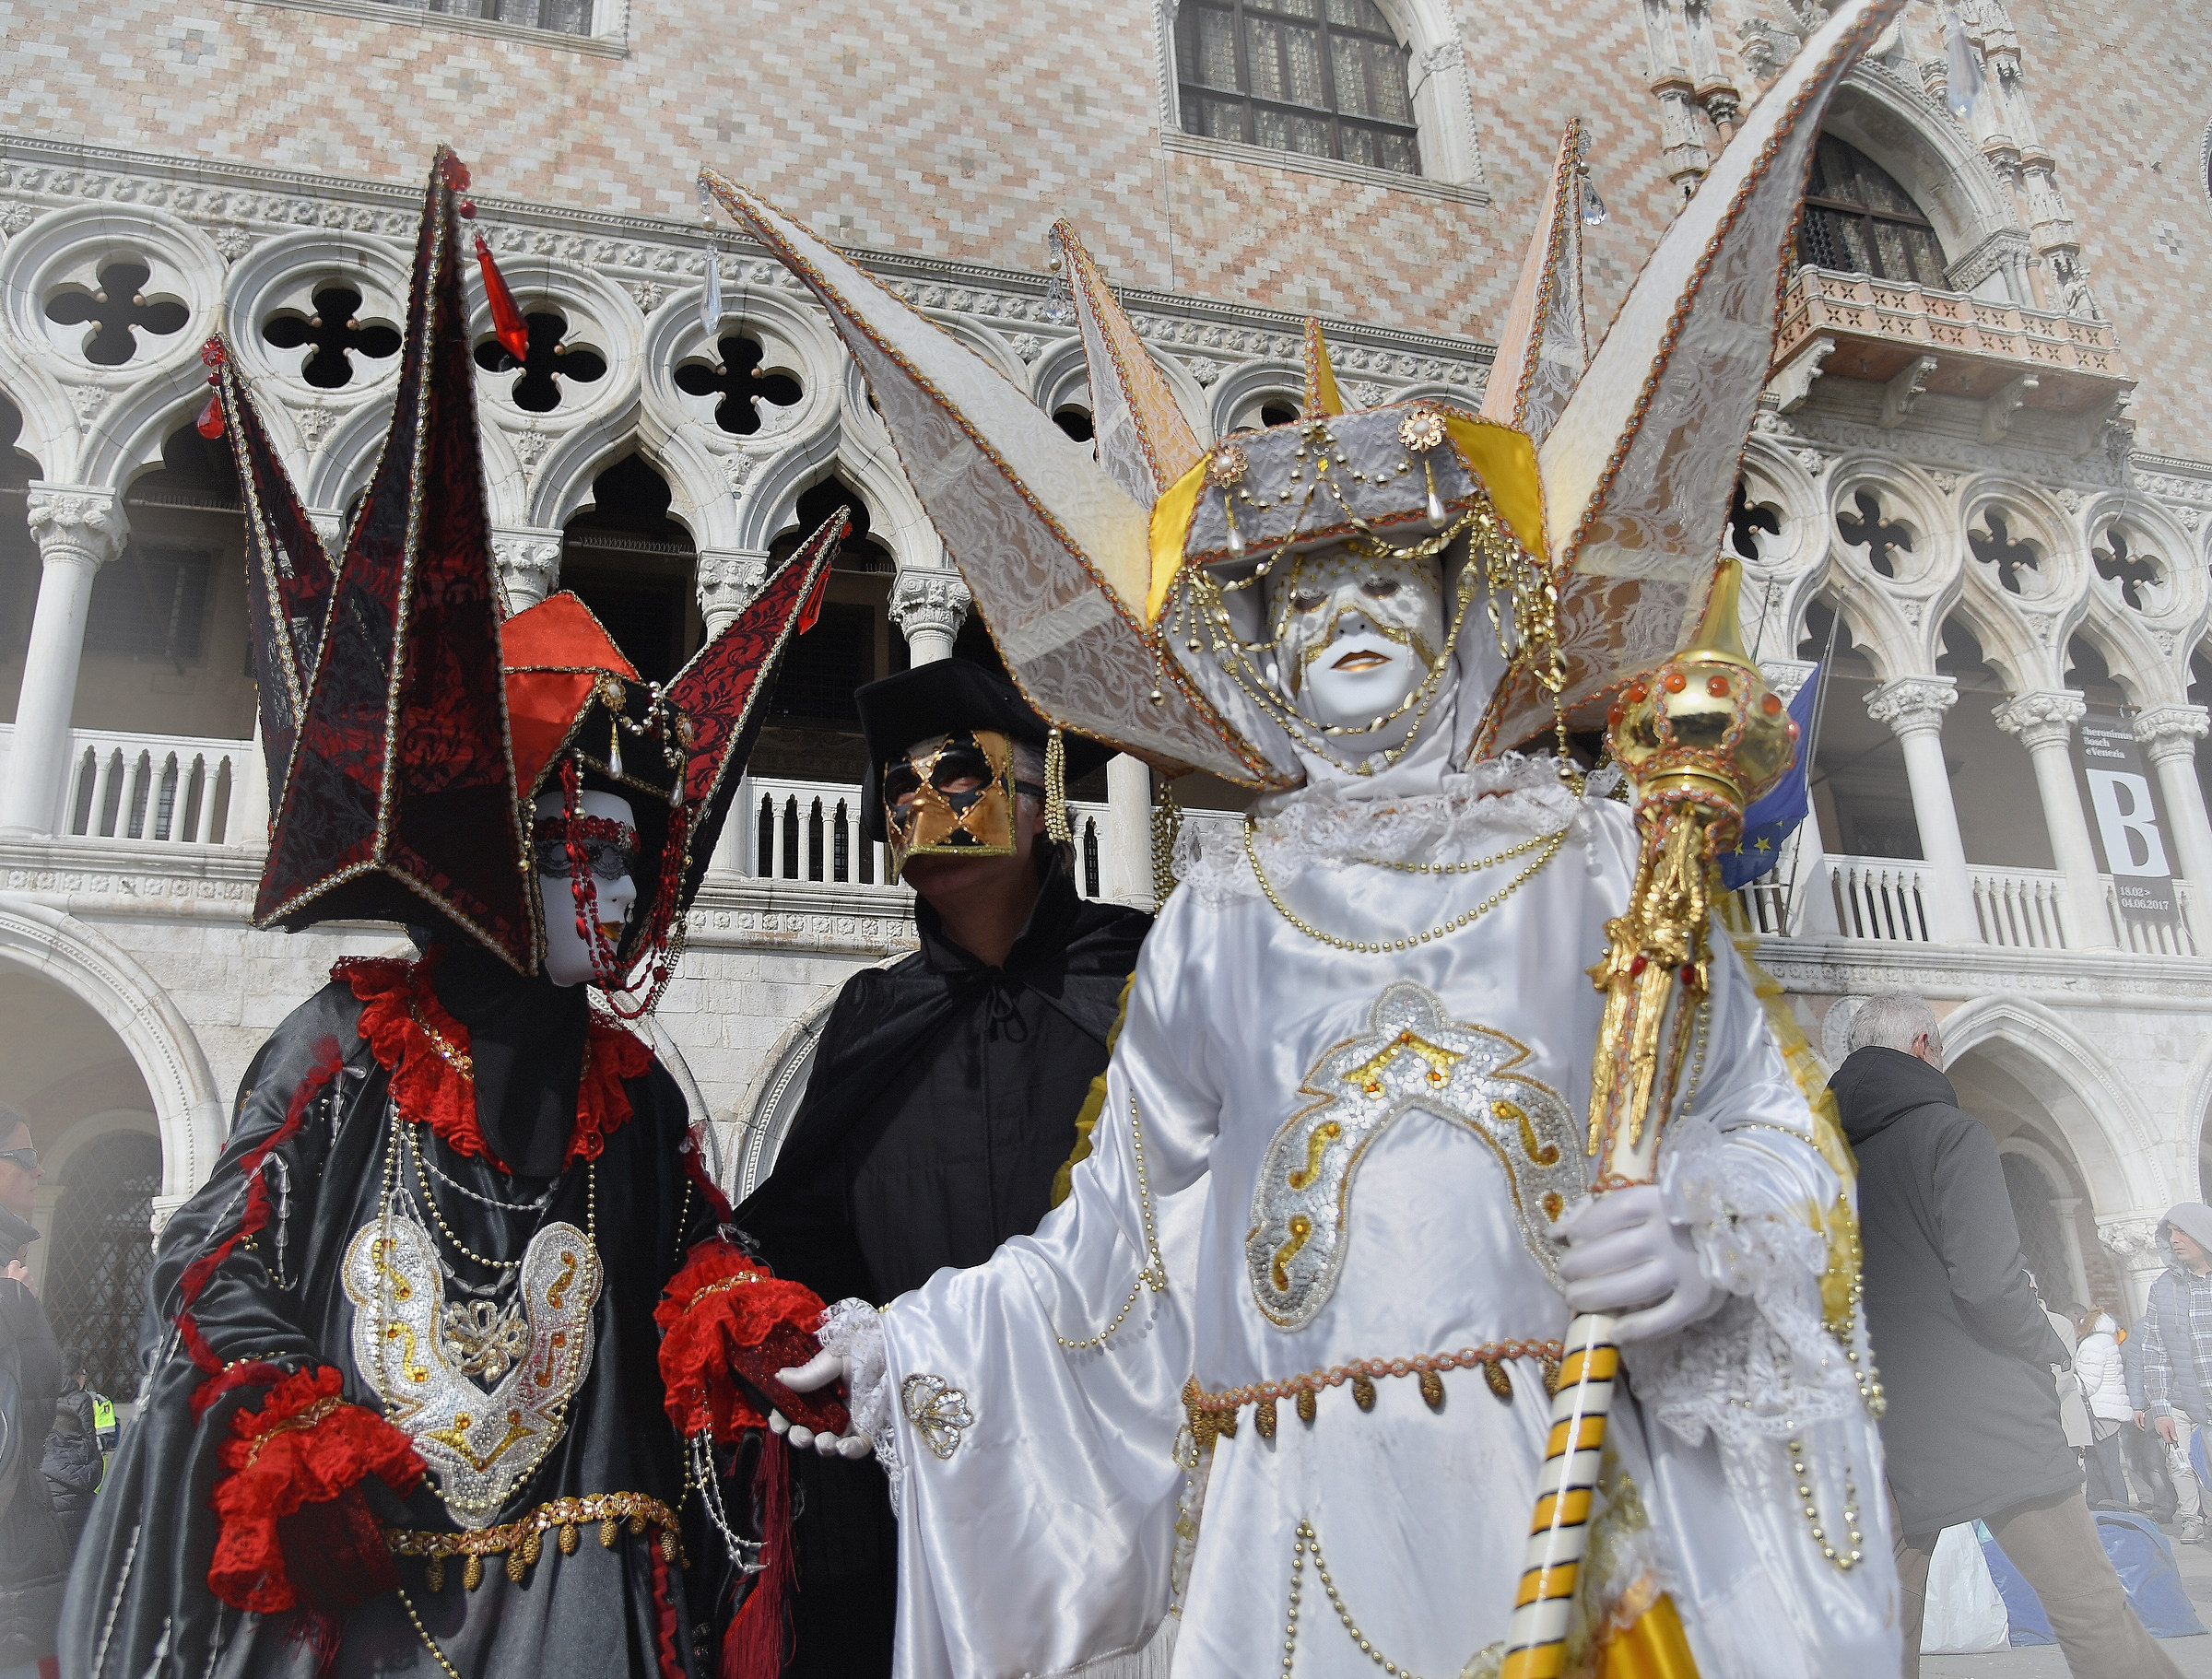 Venice 2017: It's carnival...